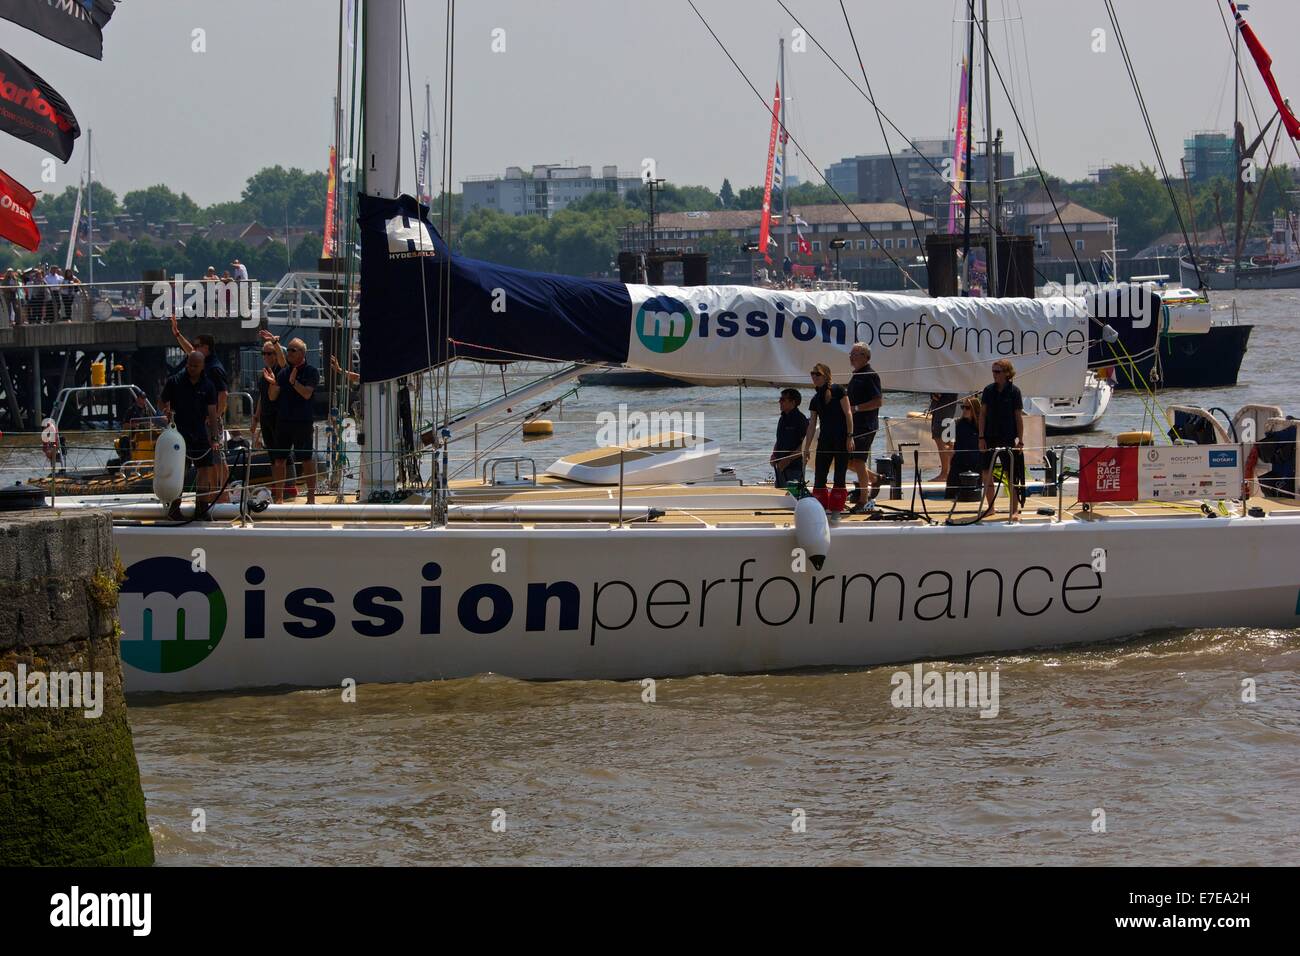 Clipper round the world yacht race Performance Mission parrainé voile saisie St Katherine Dock Londres Angleterre Europe Banque D'Images